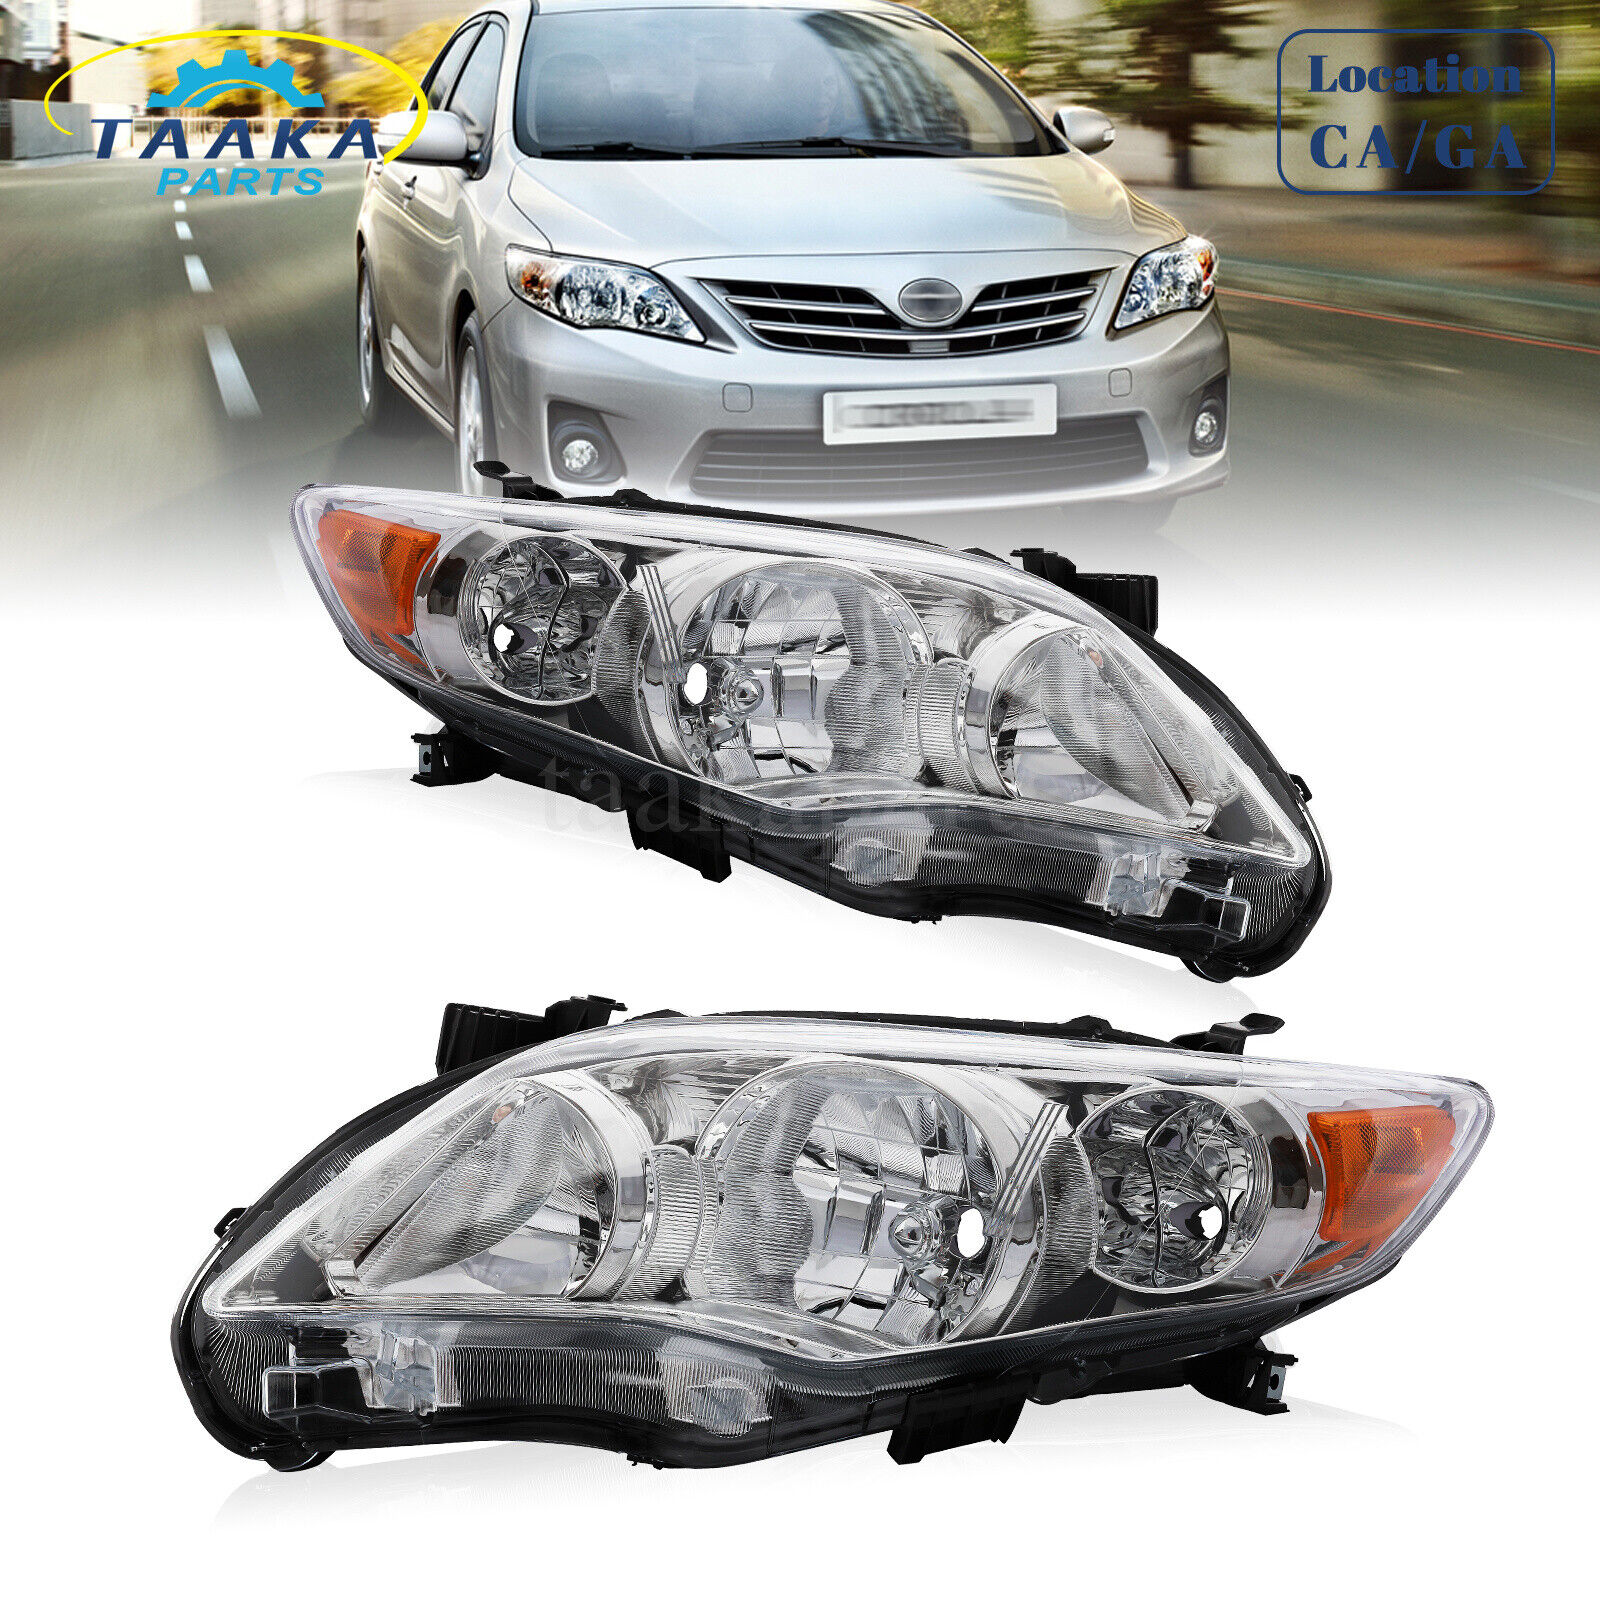 Headlights Pair For 2011 2012 2013 Toyota Corolla S XRS Chrome Headlamps RH+LH